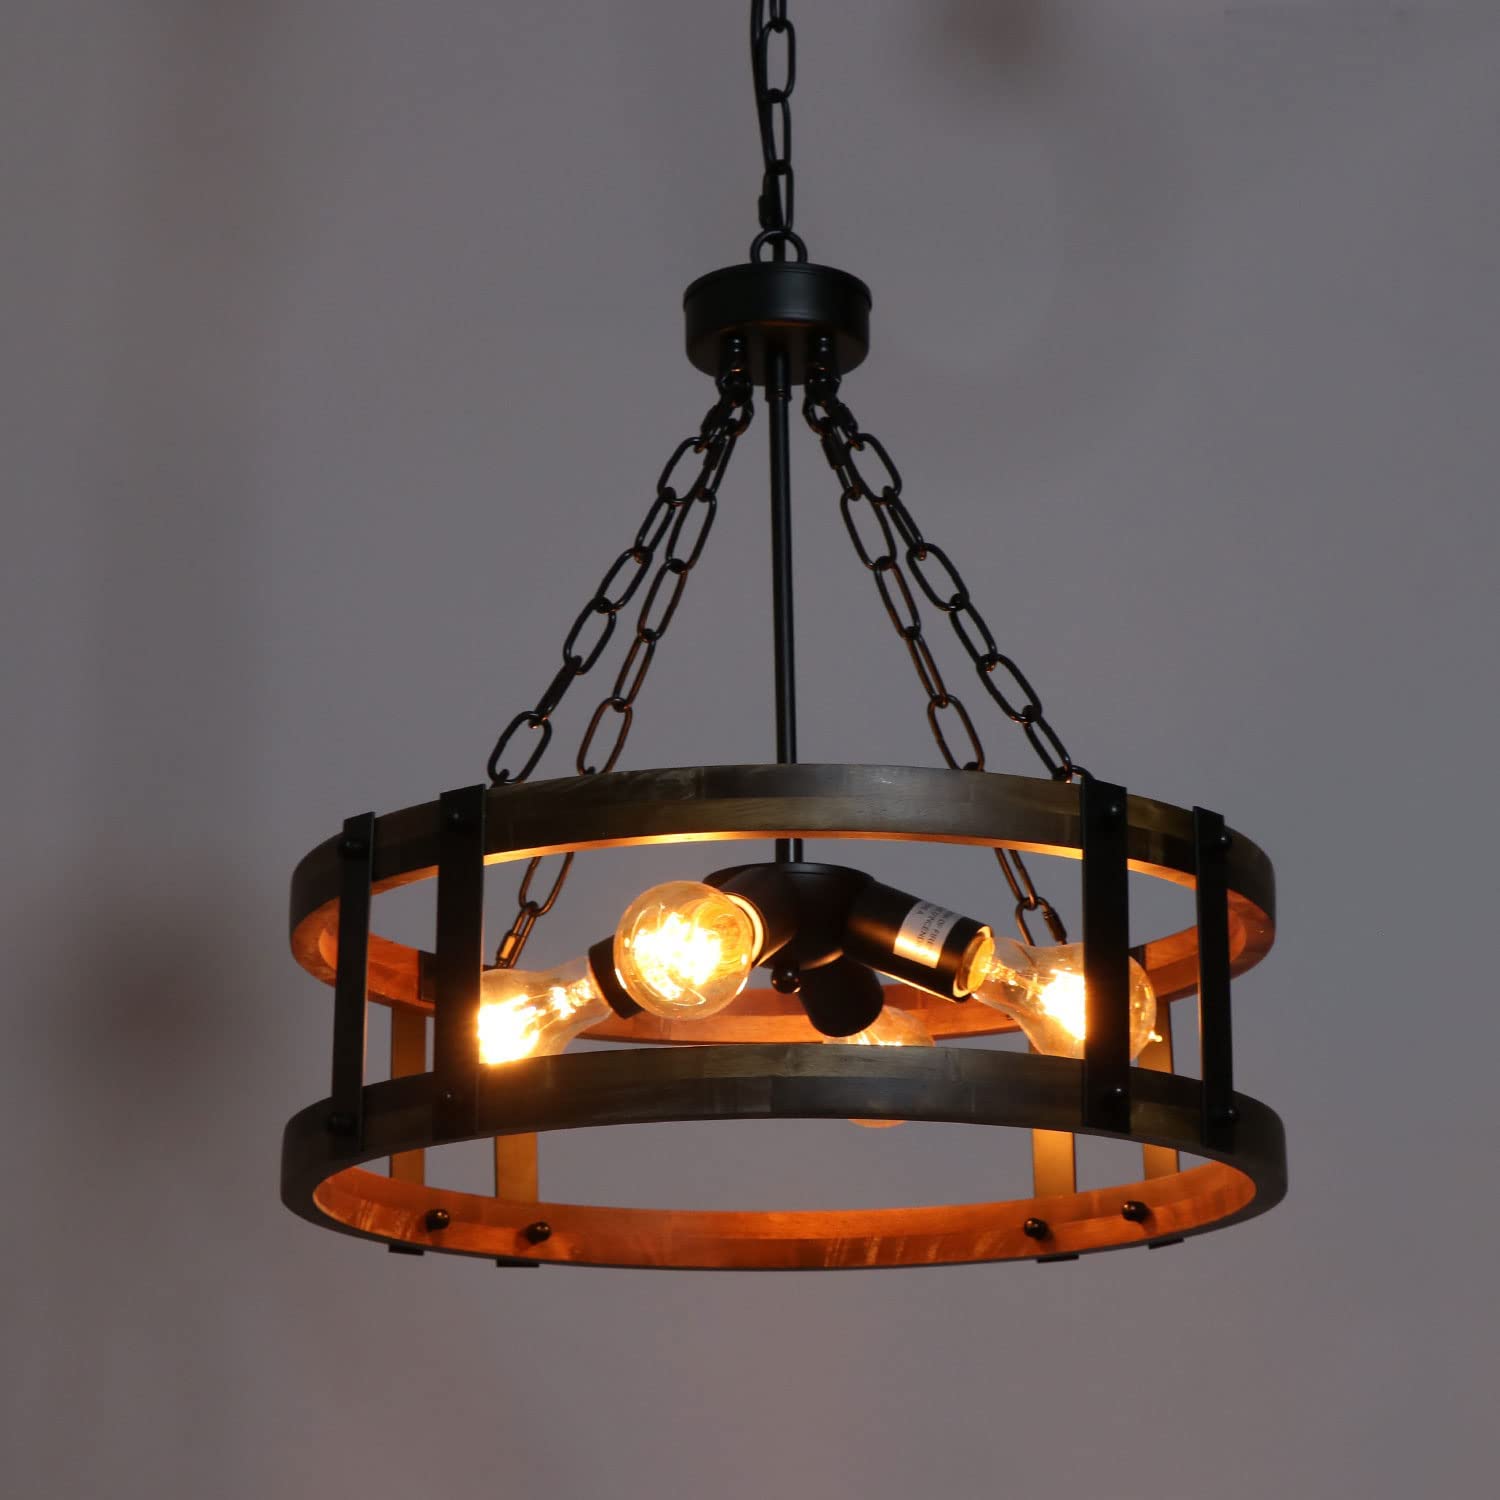 Farmhouse wood chandelier 4 light industrial dining pendant hanging light